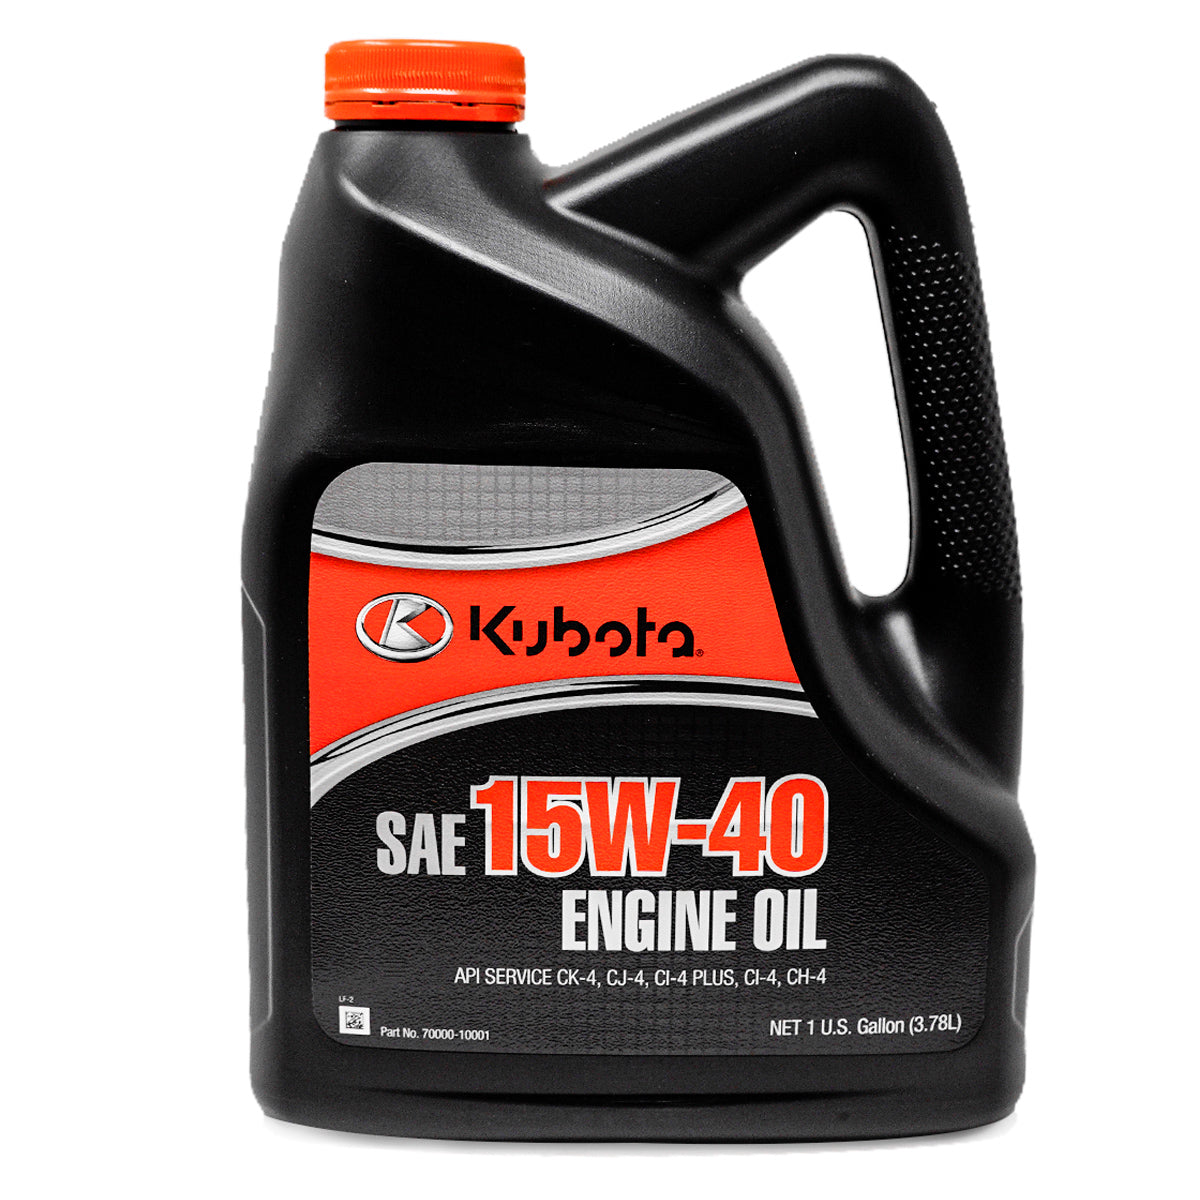 Kubota 70000-10001 15W-40 Engine Oil 1 Gallon